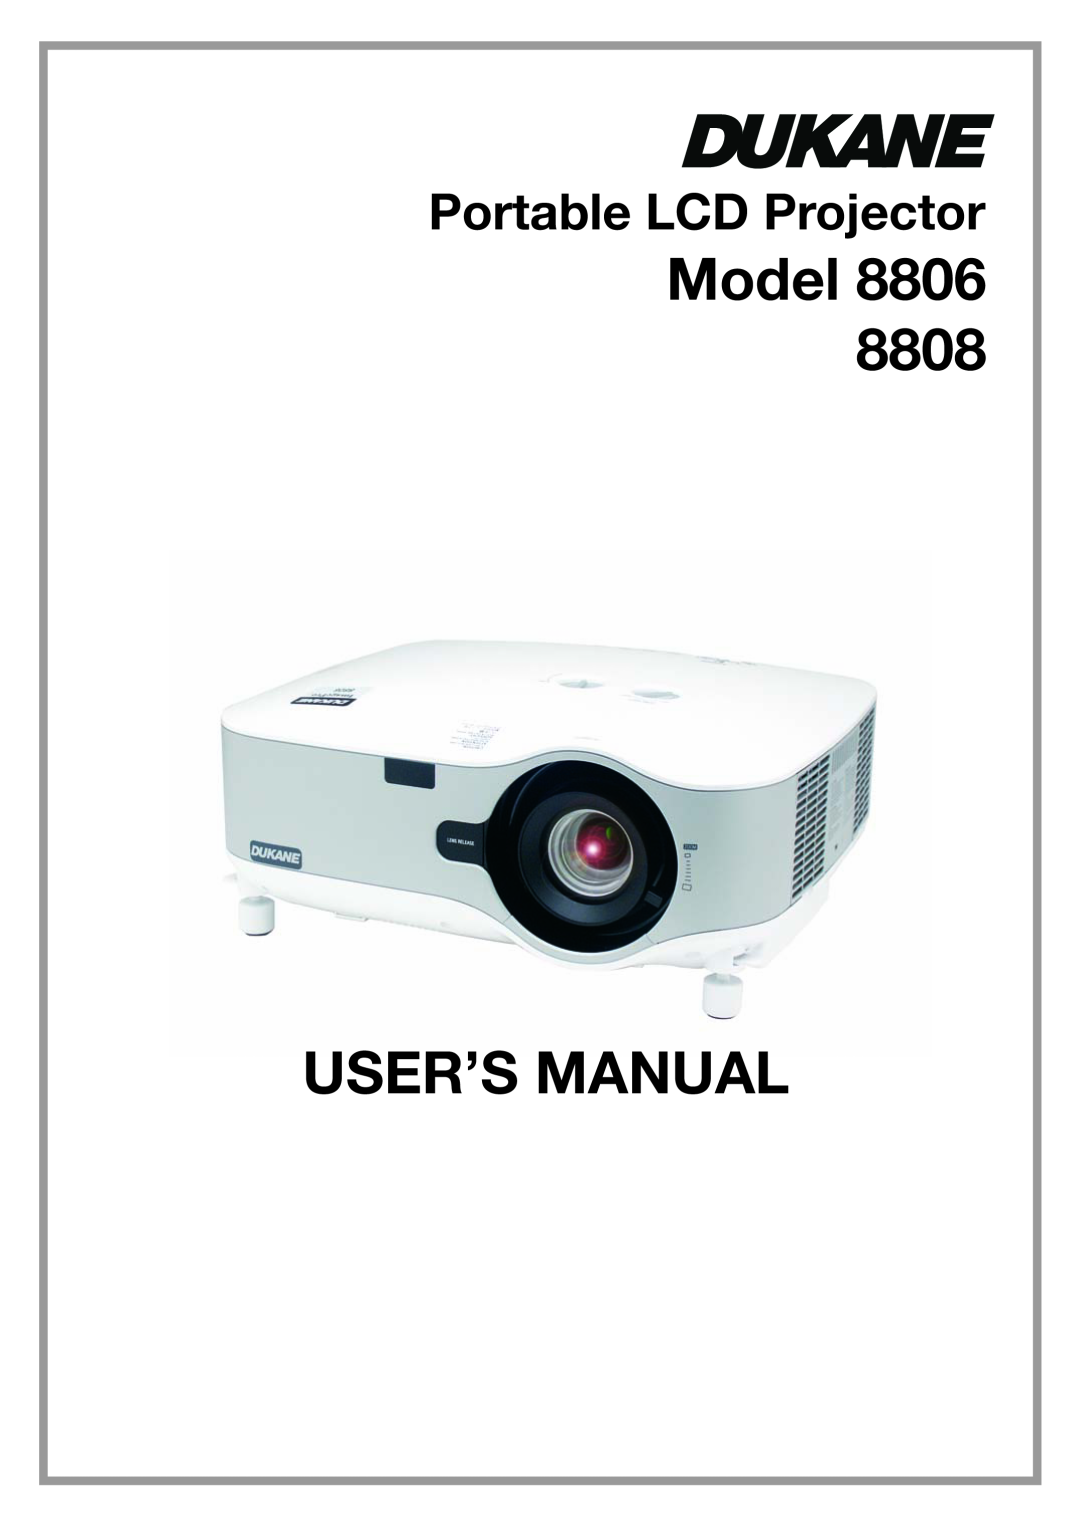 Dukane 8808 user manual Model 8806 USER’S MANUAL, Portable LCD Projector 